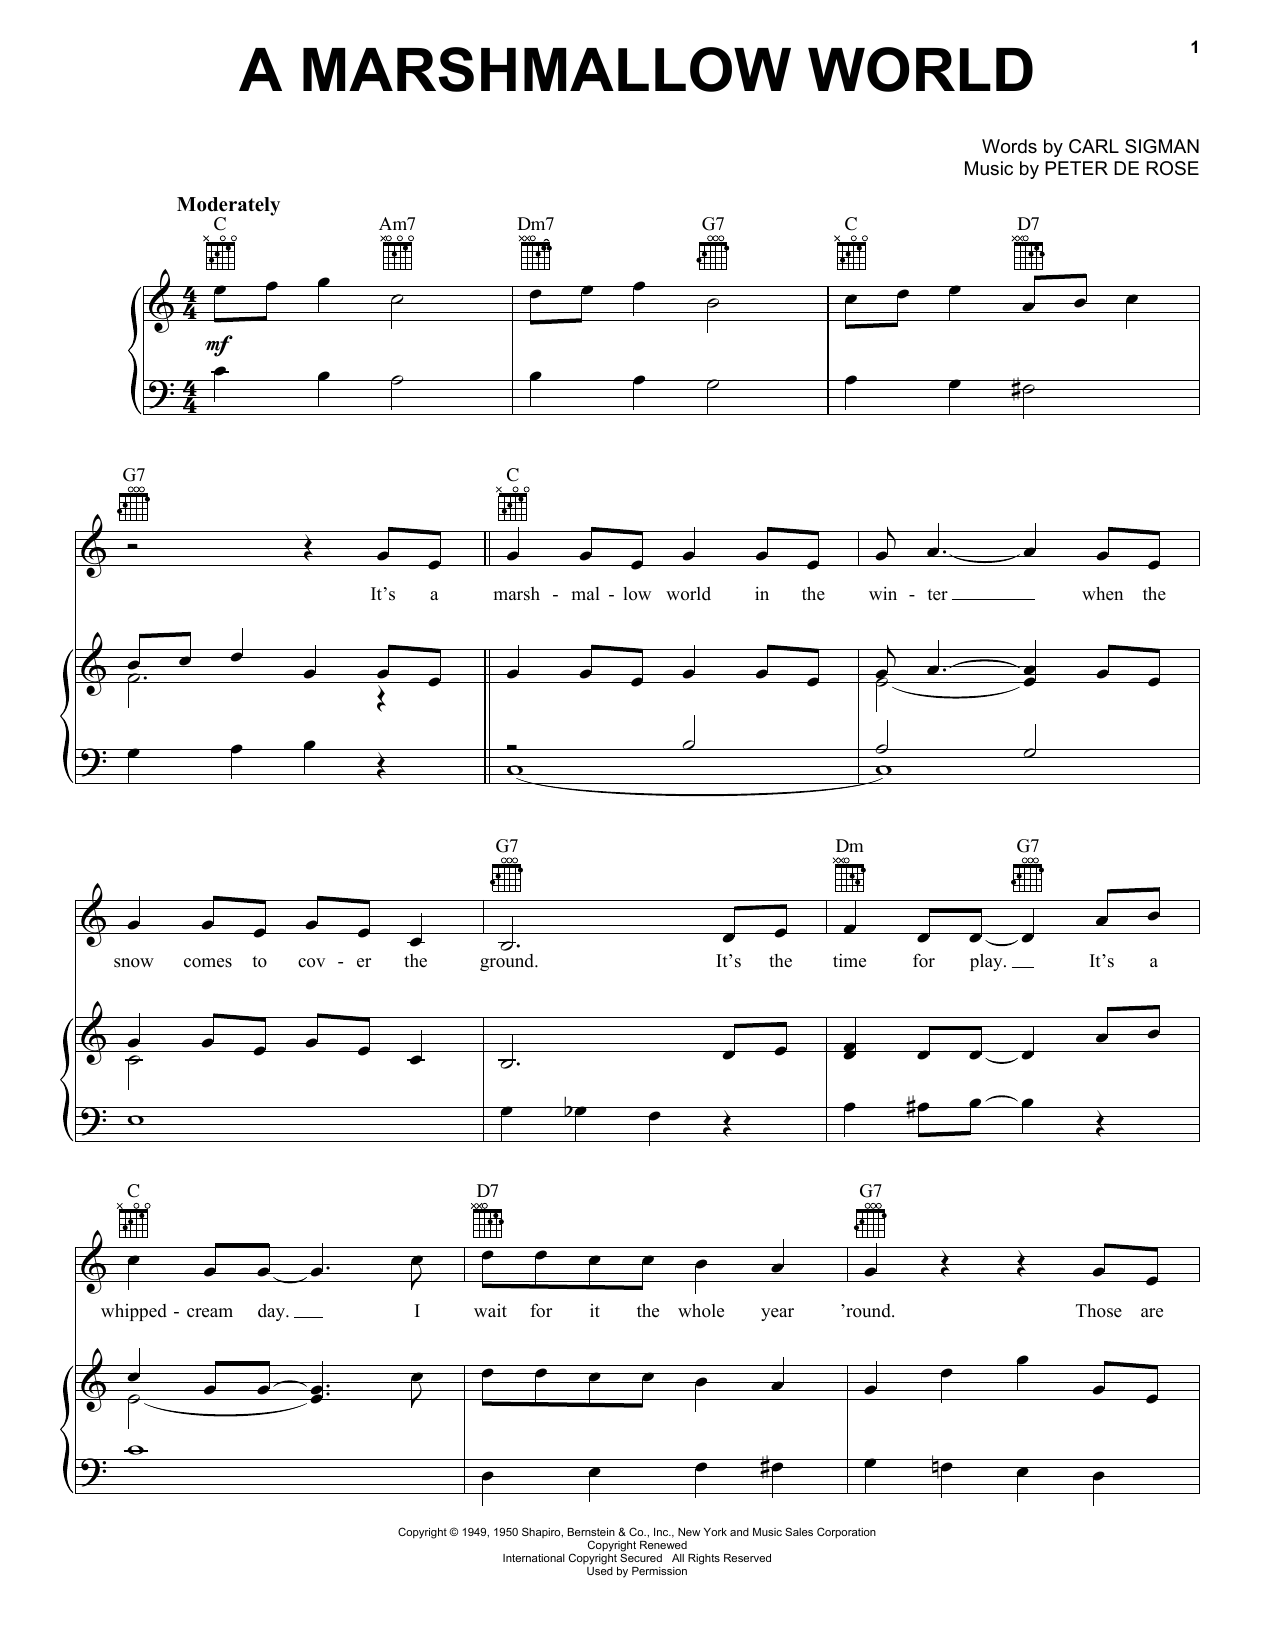 Carl Sigman & Peter De Rose A Marshmallow World Sheet Music Notes & Chords for Viola - Download or Print PDF